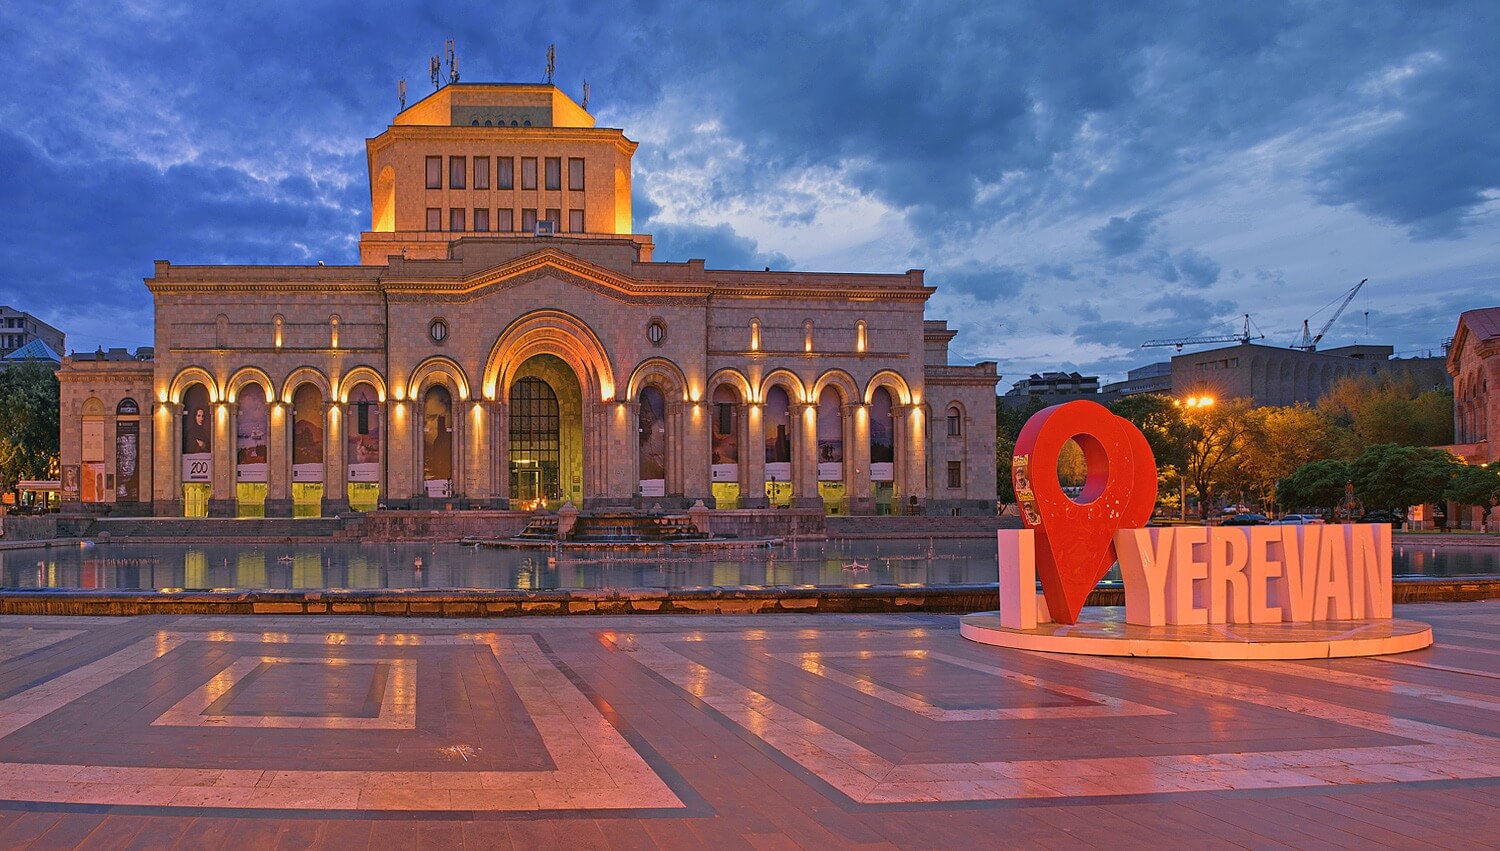 The History Museum of Armenia